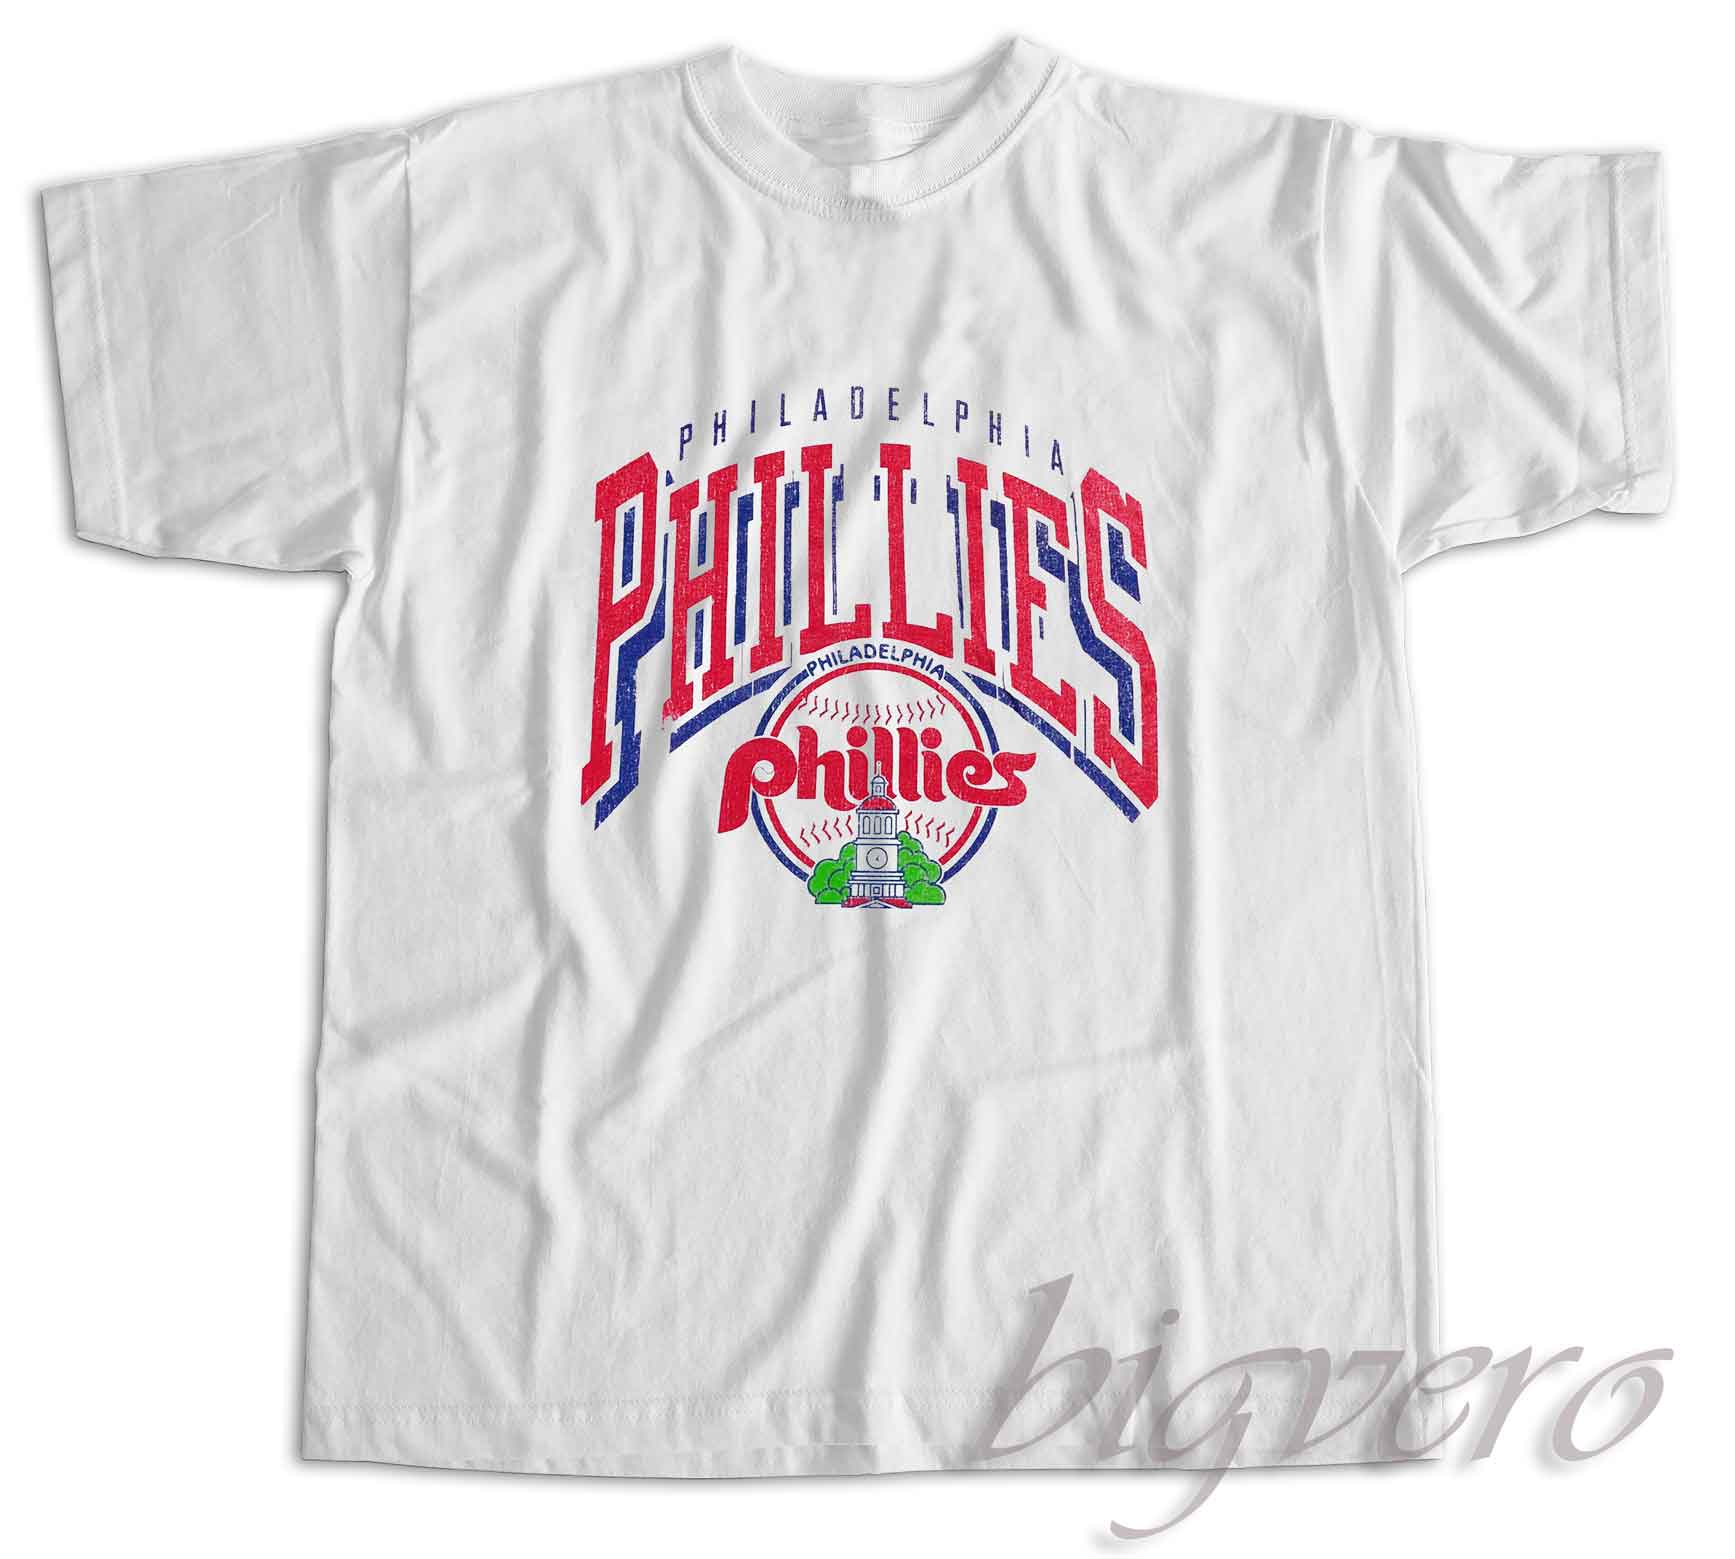 Major League Baseball Philadelphia Phillies retro logo T-shirt